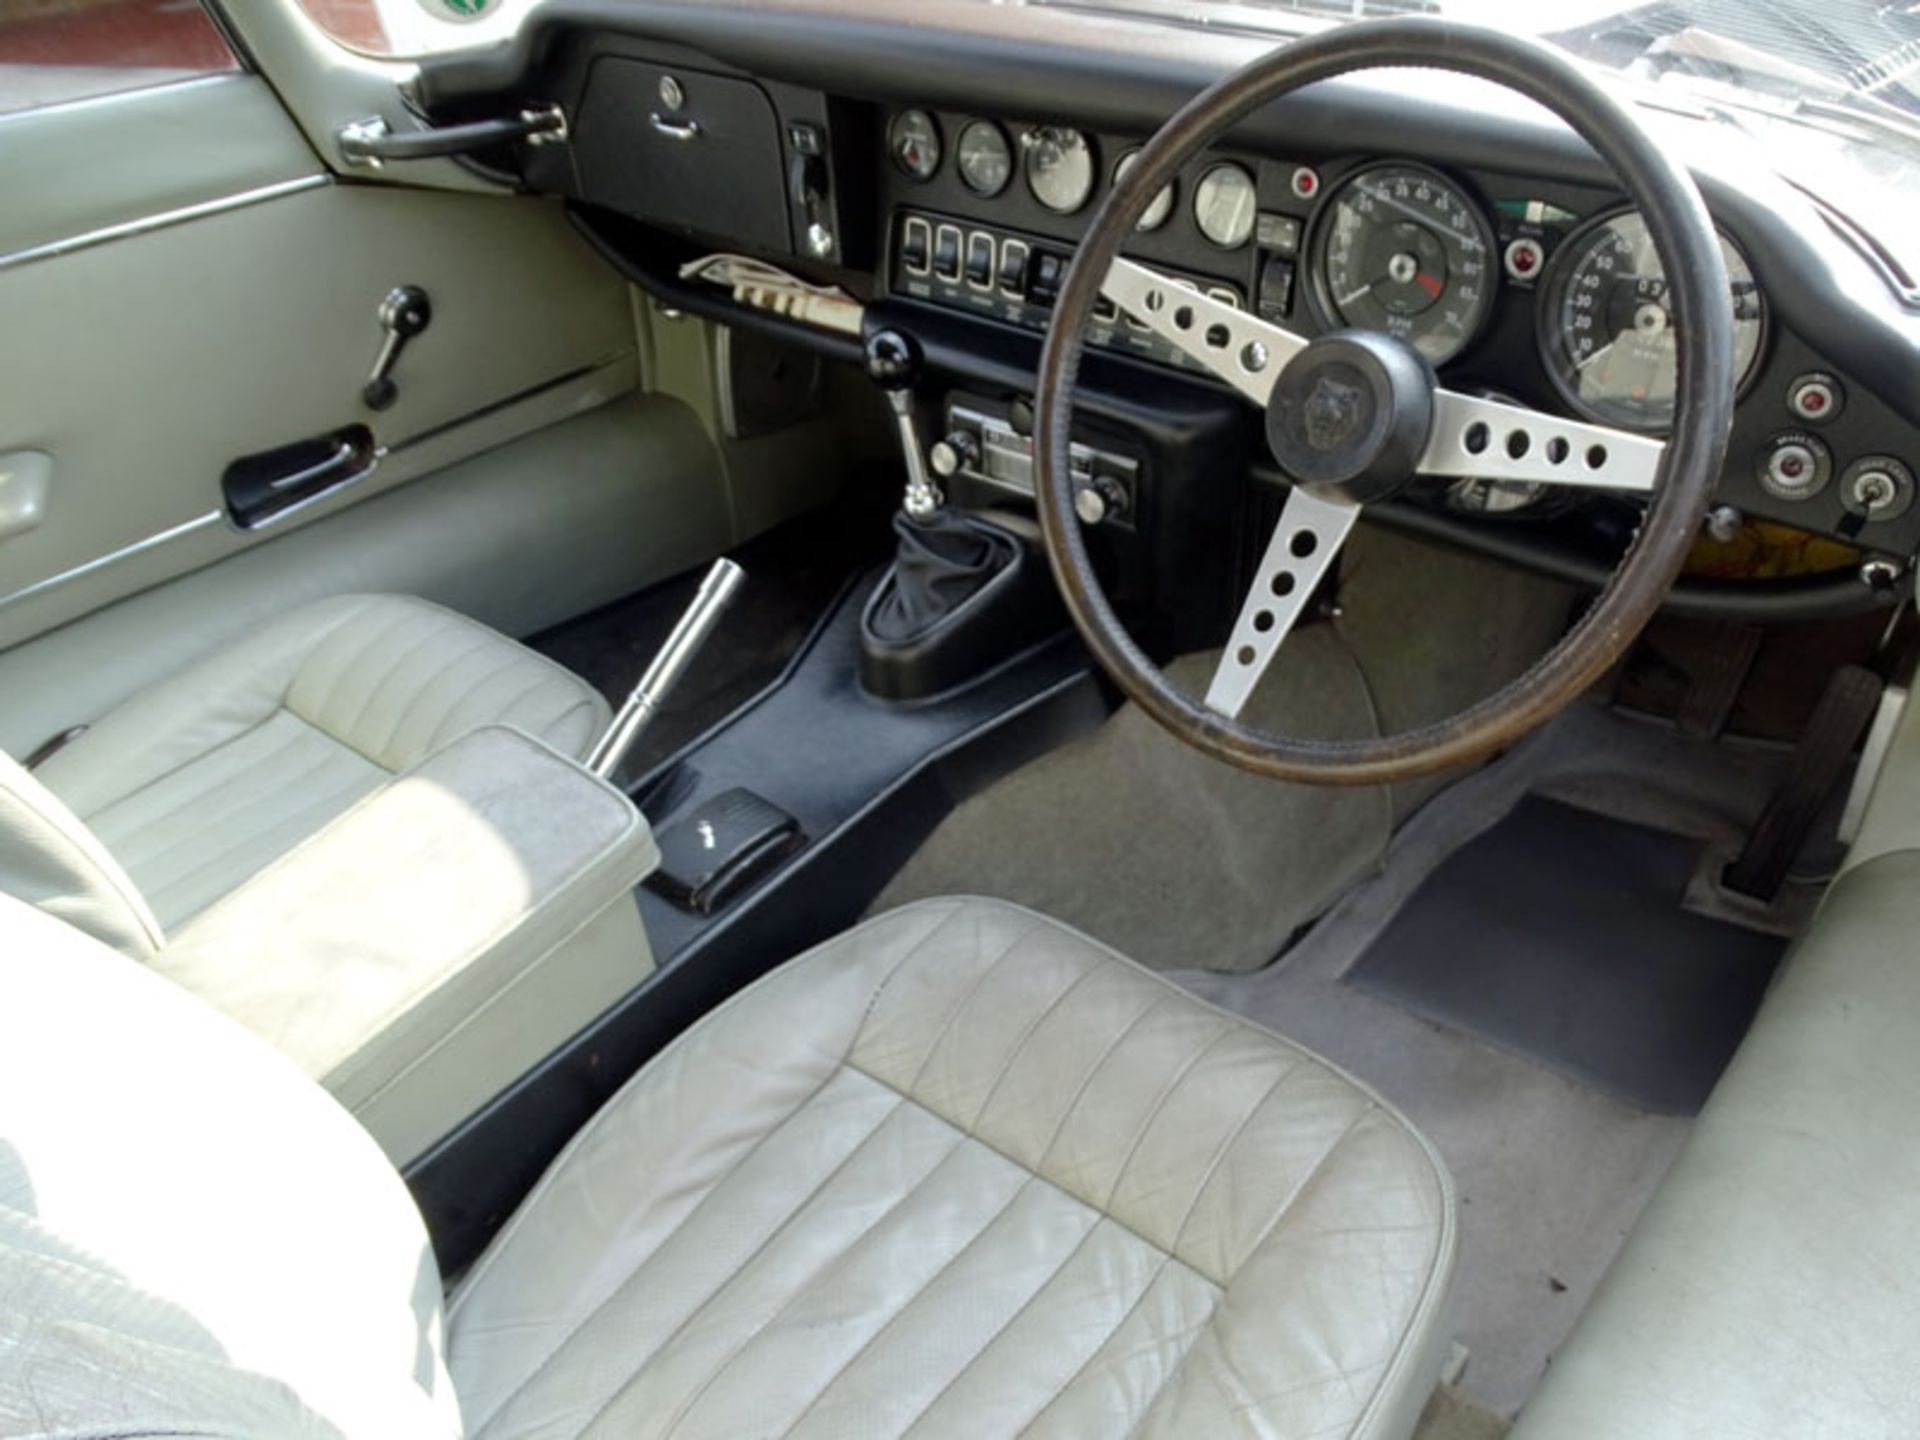 1971 Jaguar E-Type V12 Coupe - Image 4 of 9